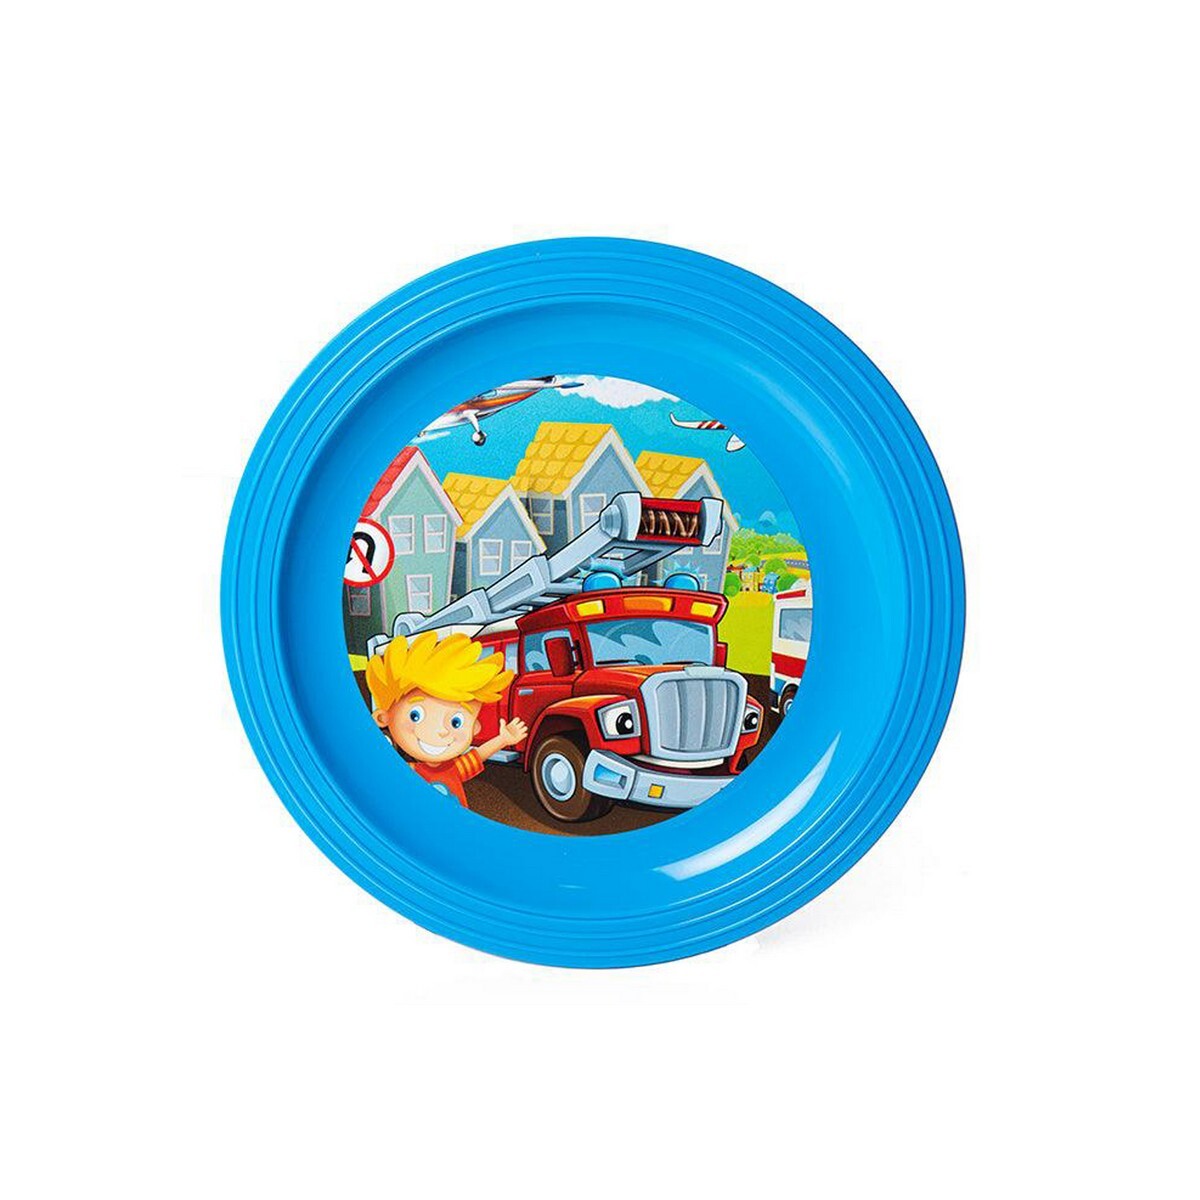 Herevin Plastic Bowl-Blue Cars 161486�002